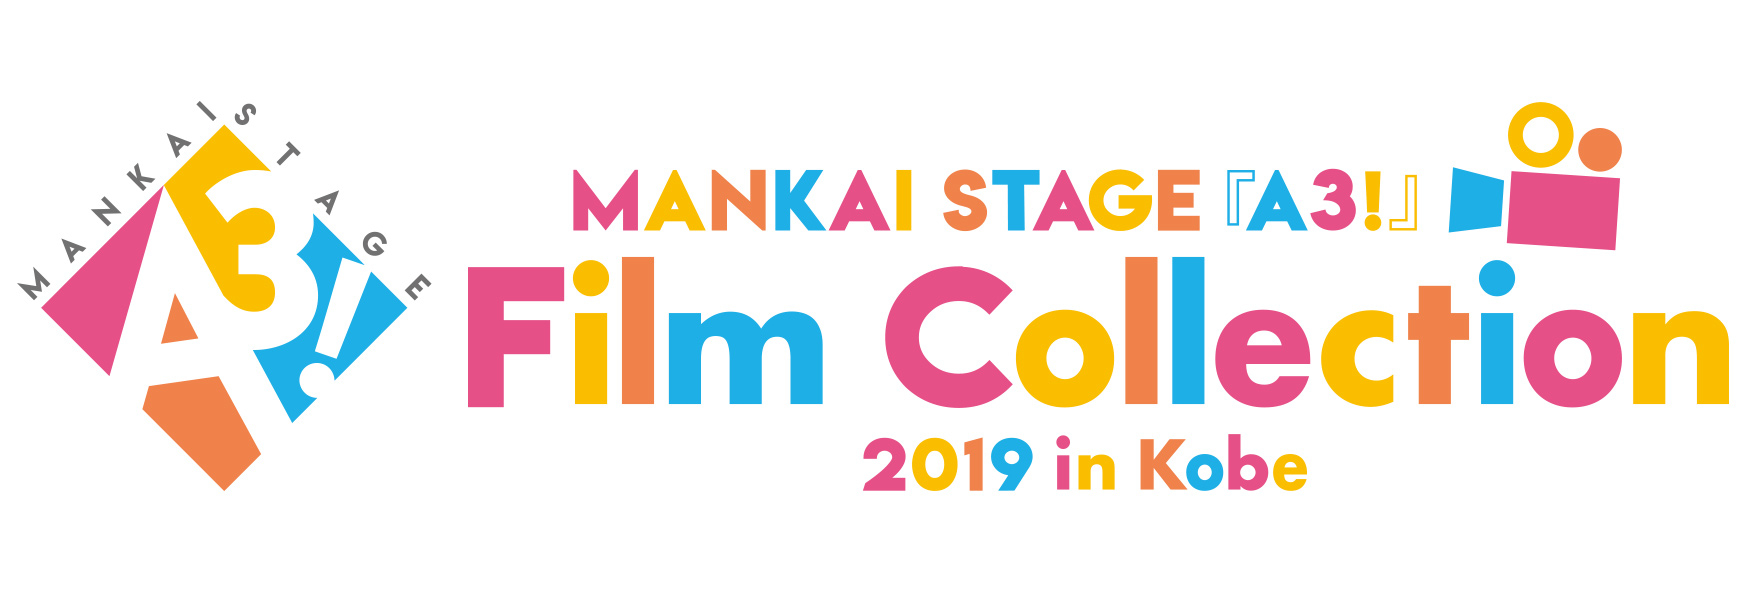 MANKAI STAGE『A3!』今までに上演された3作品の映像上映会や企画展が行われる初のイベント「MANKAI STAGE『A3!』Film Collection 2019 in Kobe」開催決定！-1